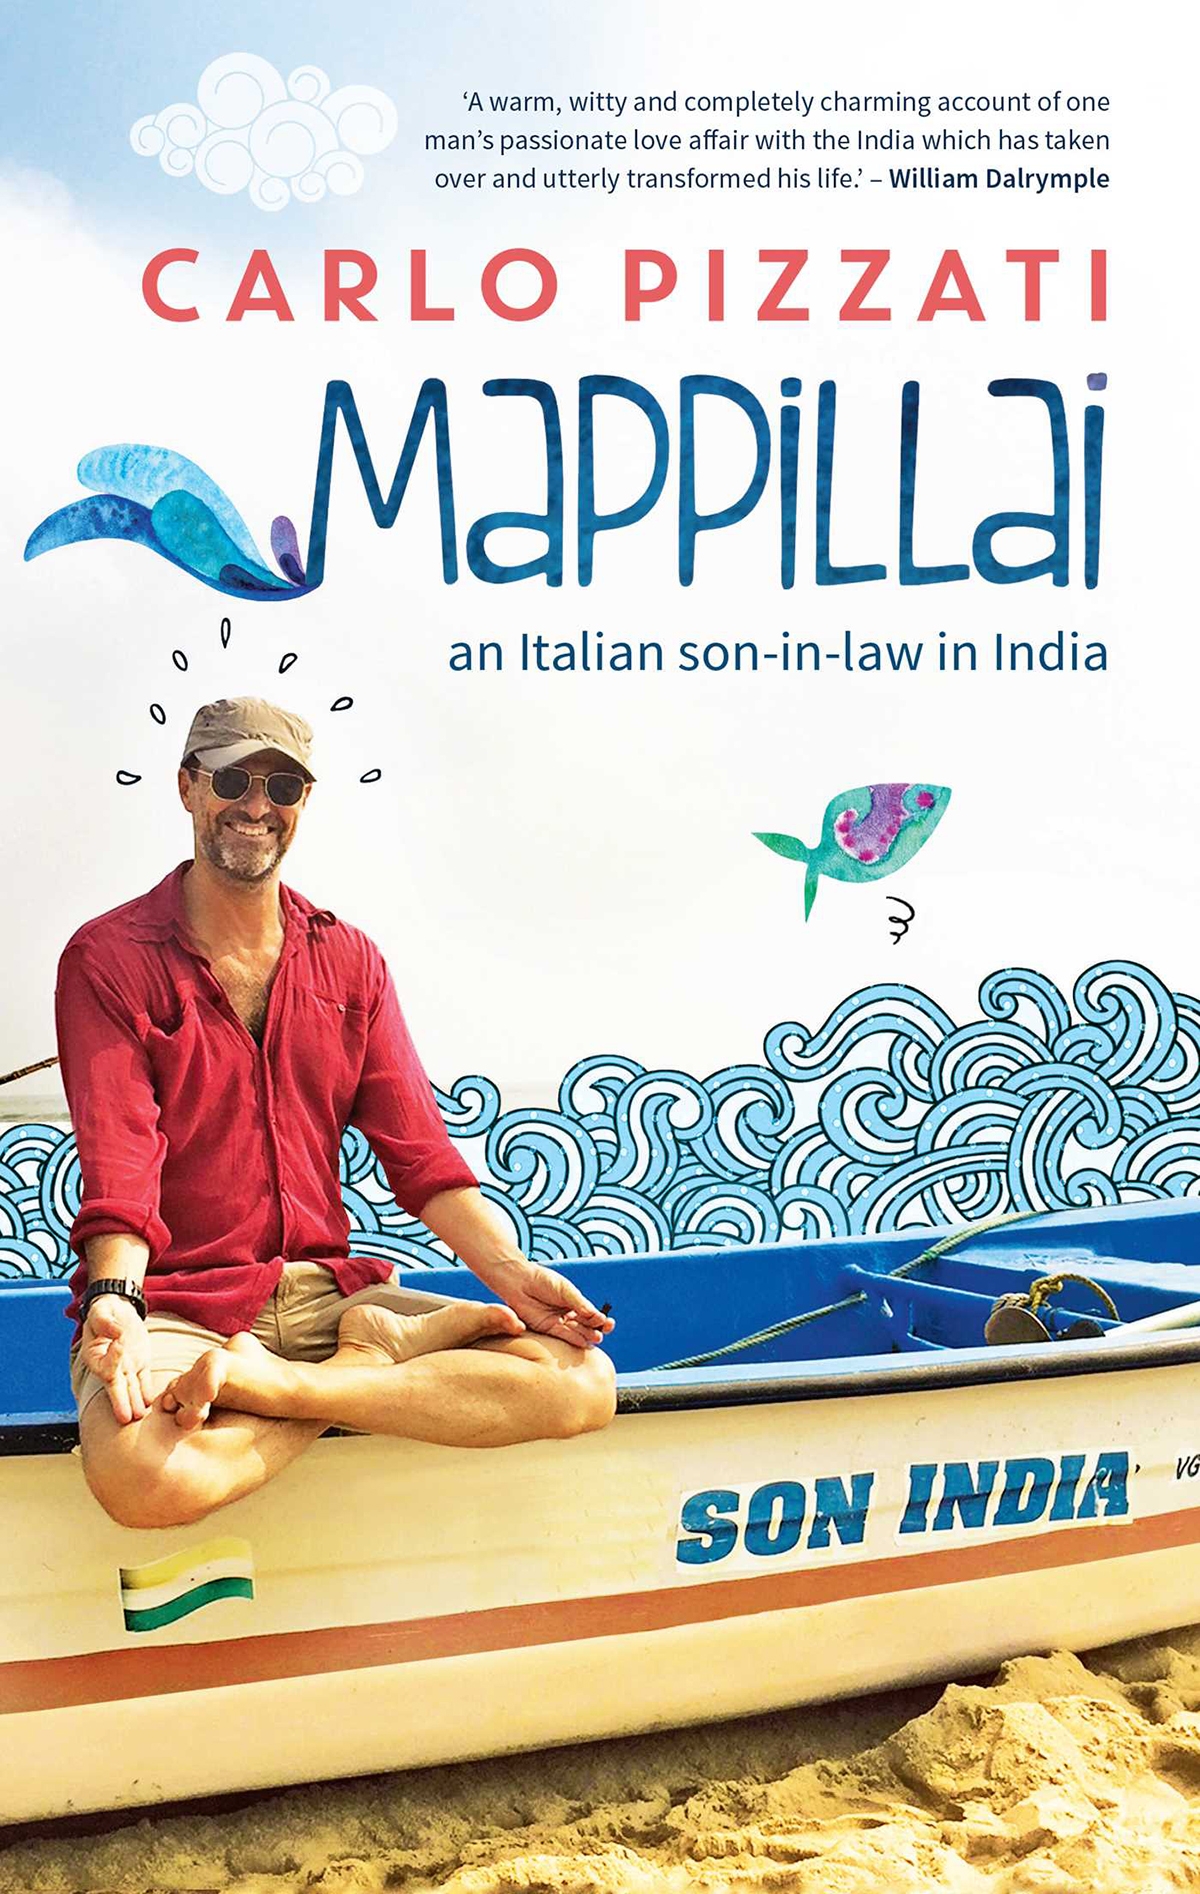 Book cover of Carlo Pizzati's Mappillai: an Italian son-in-law in India